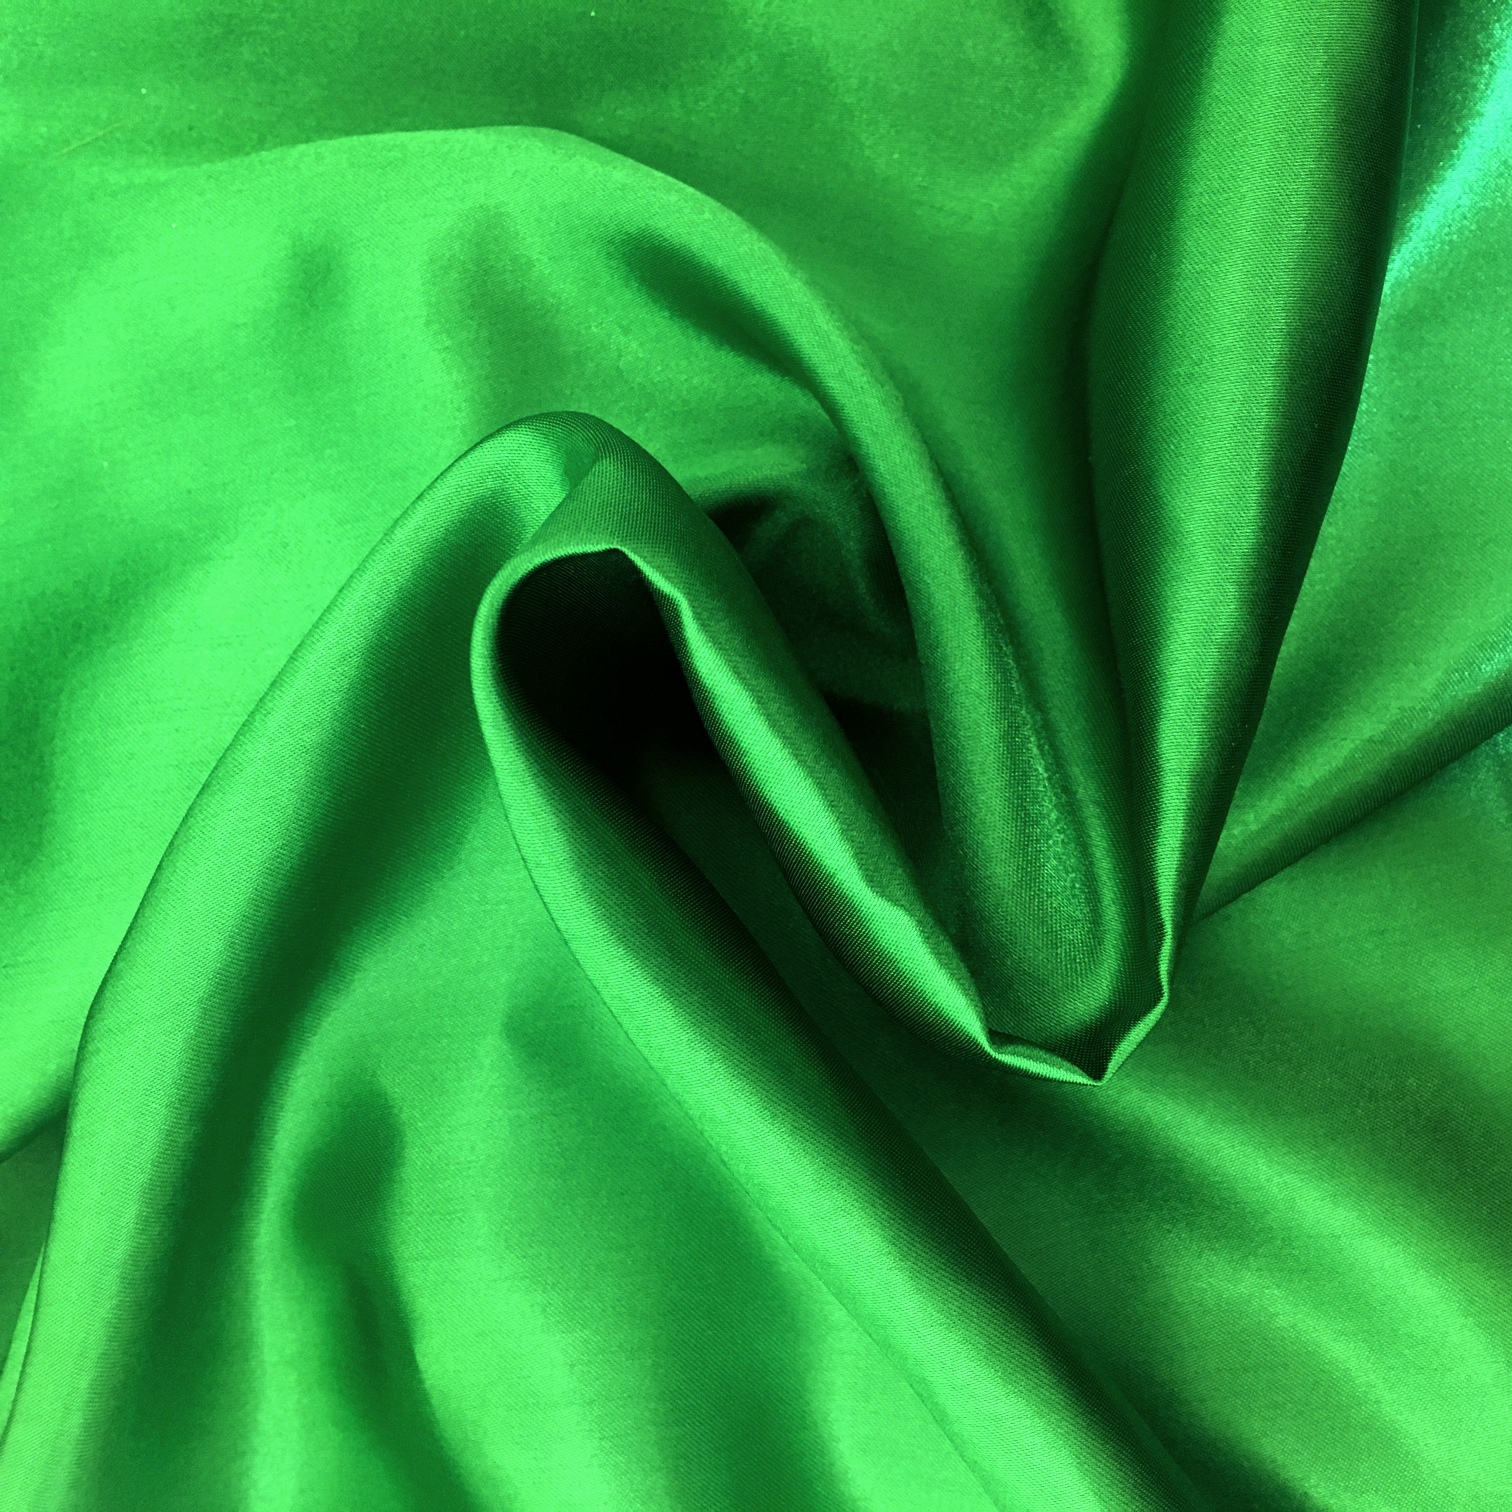 20 metres of Polyester Satin - Emerald Green